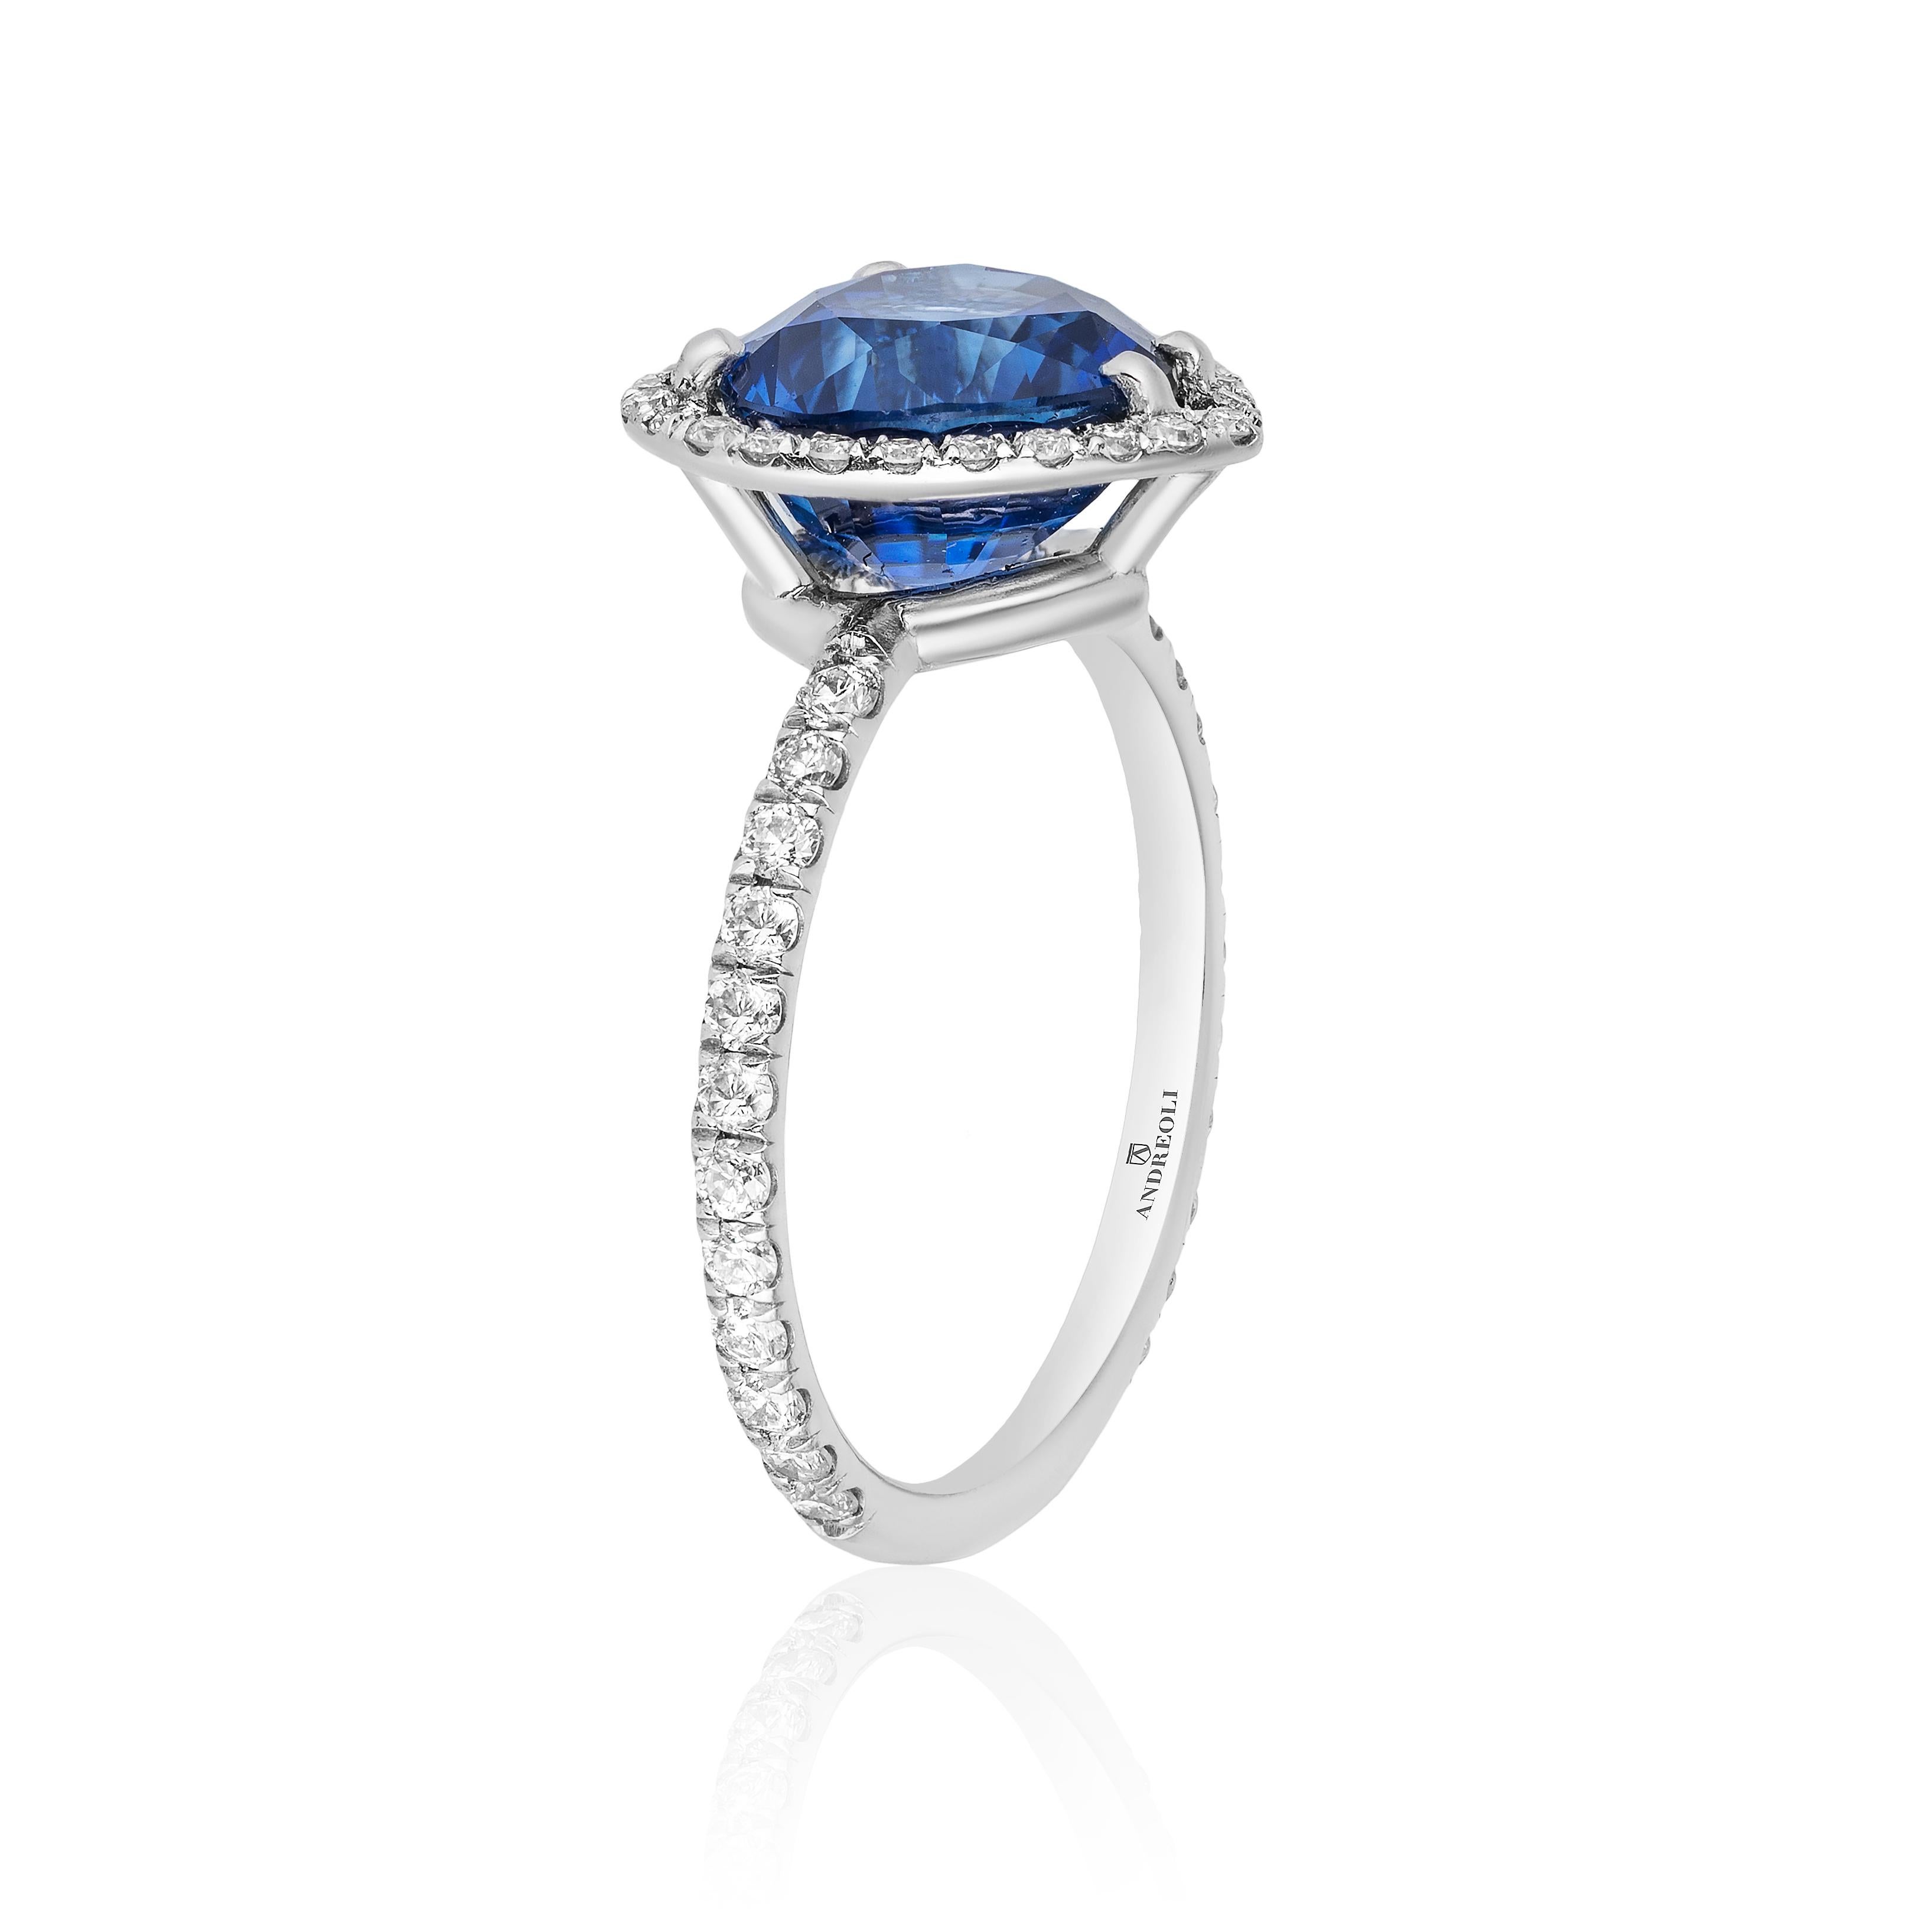 Andreoli Certified 3.78 Carat Ceylon Blue Sapphire Diamond Platinum Heart Shape Ring

This Ring Features 0.56 carat round brilliant cut diamonds. F-G-H Color, VS-SI Clarity.

3.78ct Blue Sapphire Ceylon Origin CDC Swiss Gem Lab Report

Set in